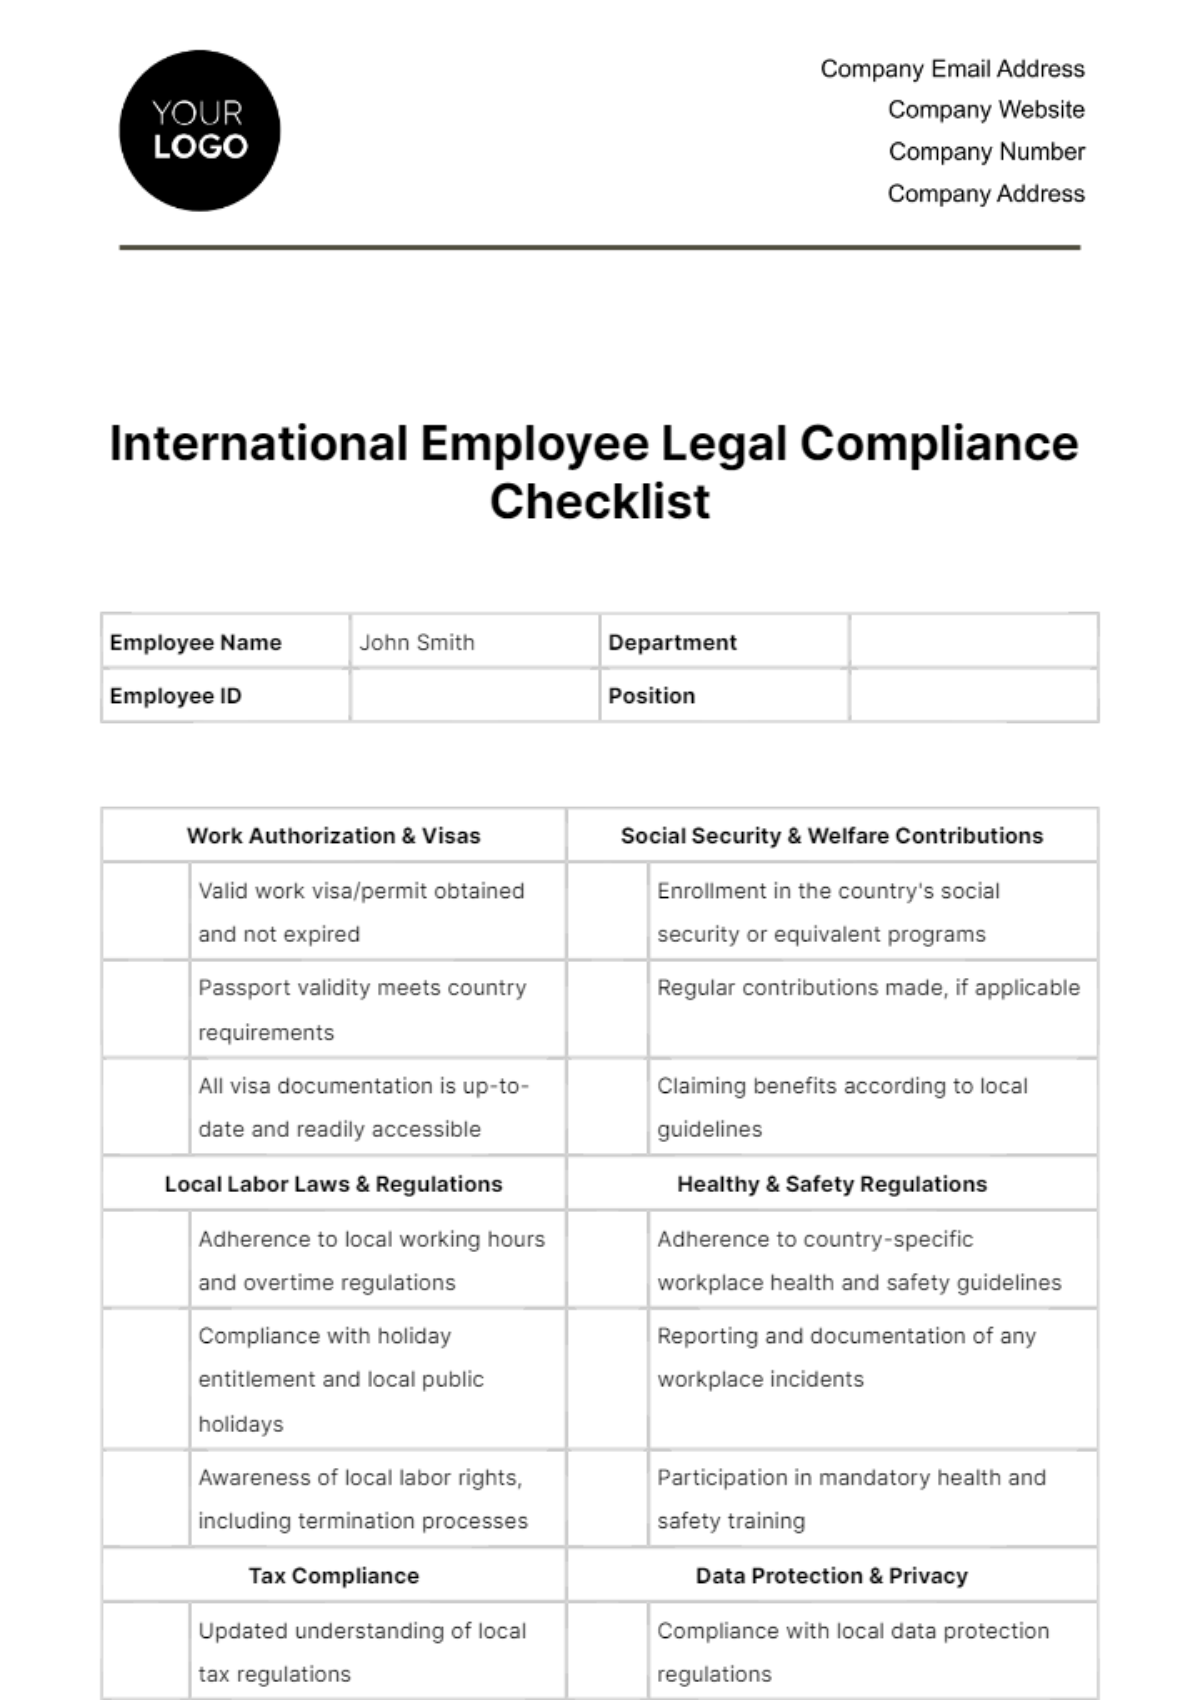 International Employee Legal Compliance Checklist HR Template